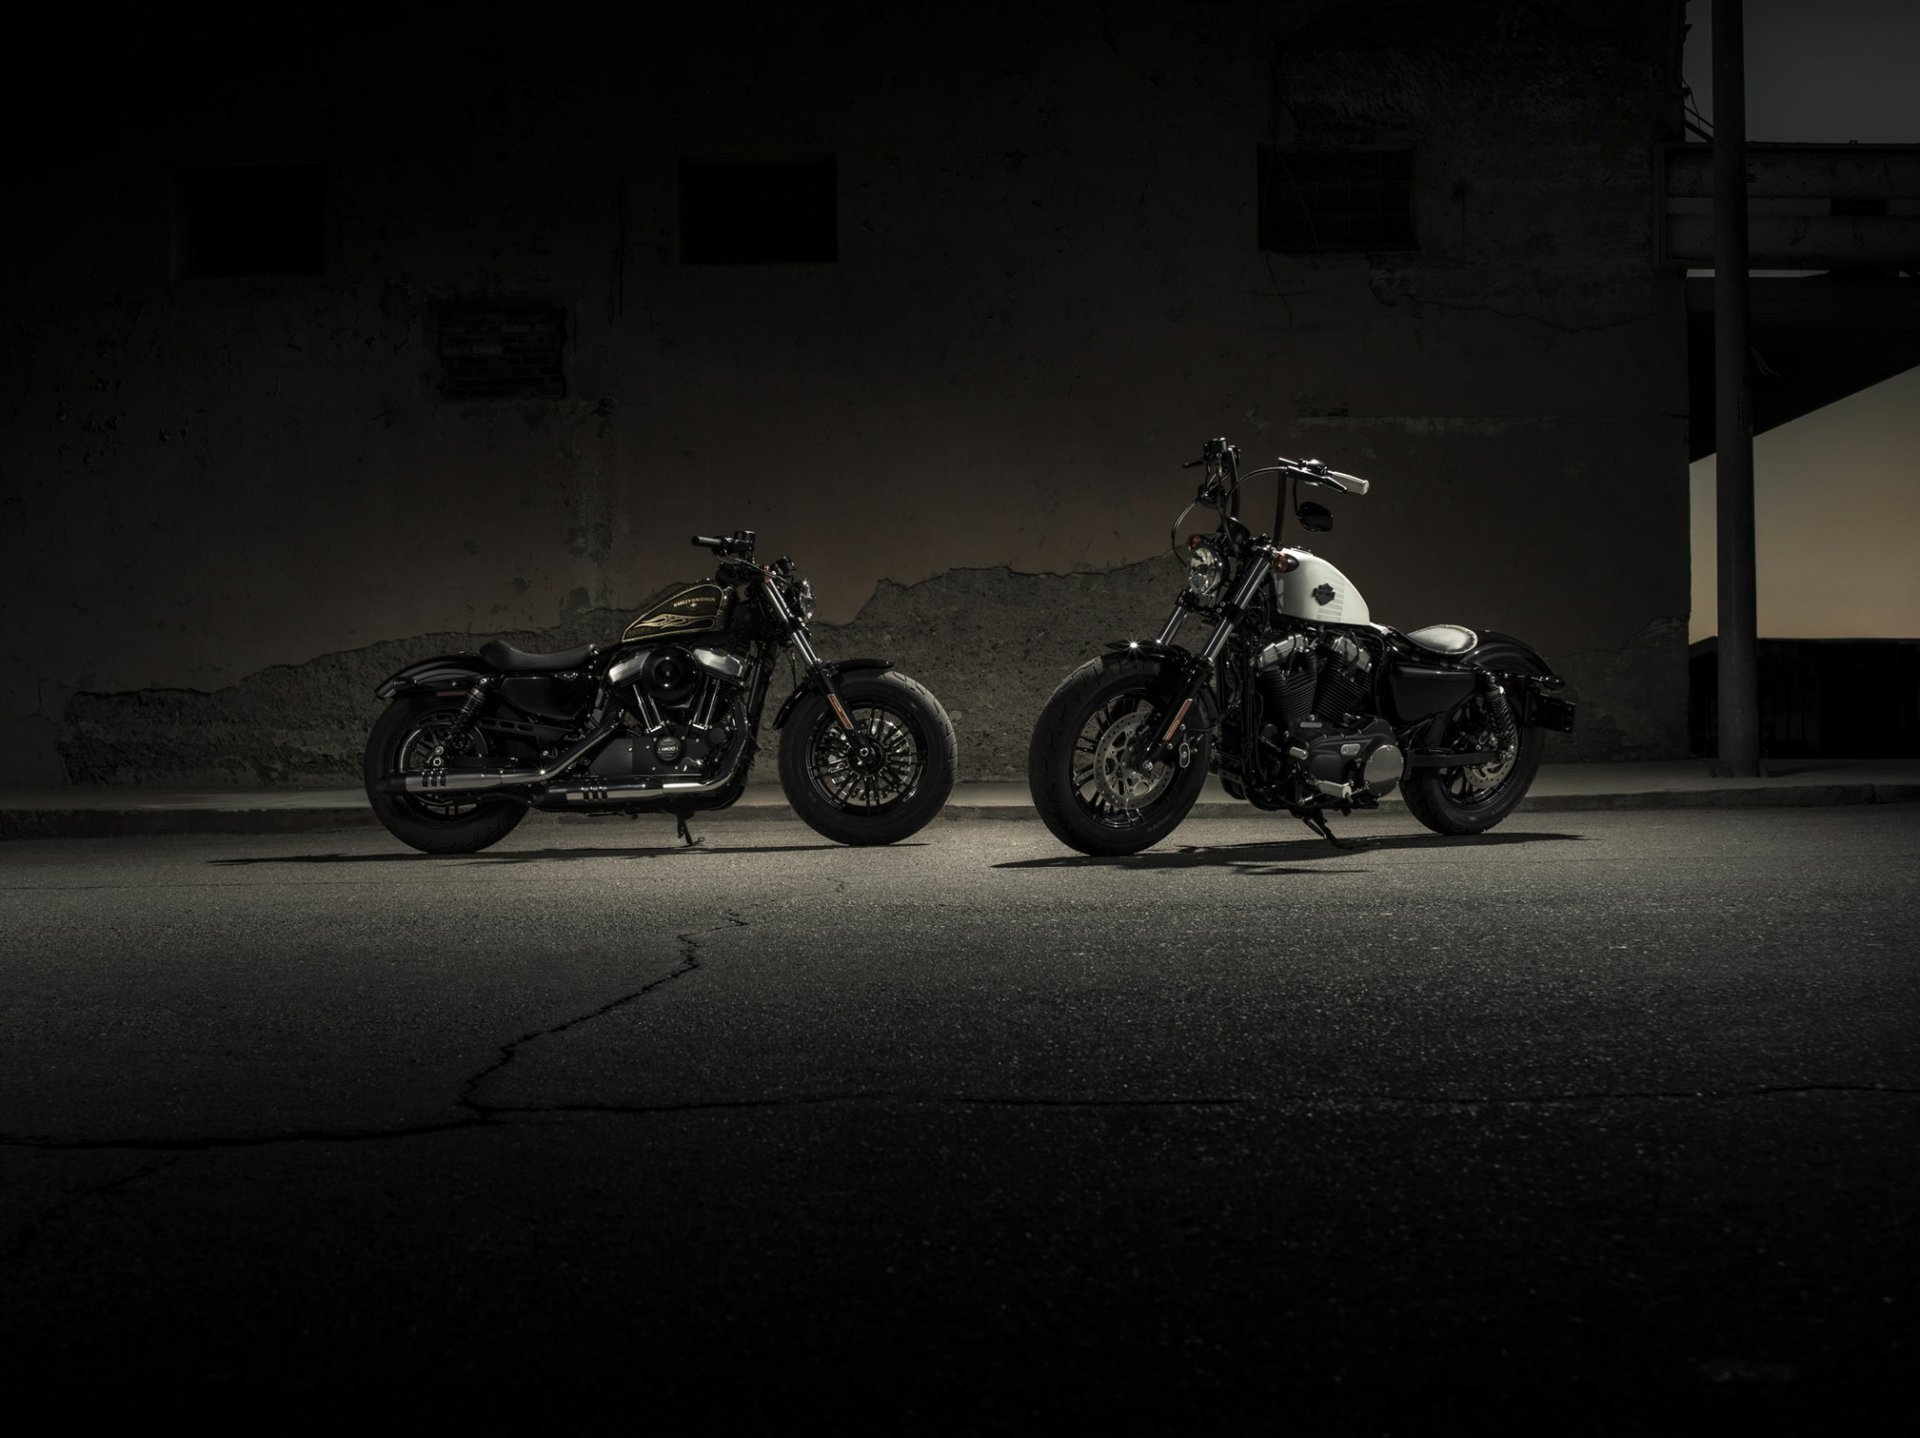 Harley-Davidson X 440 Images [HD]: Photo Gallery of Harley-Davidson X 440 -  DriveSpark